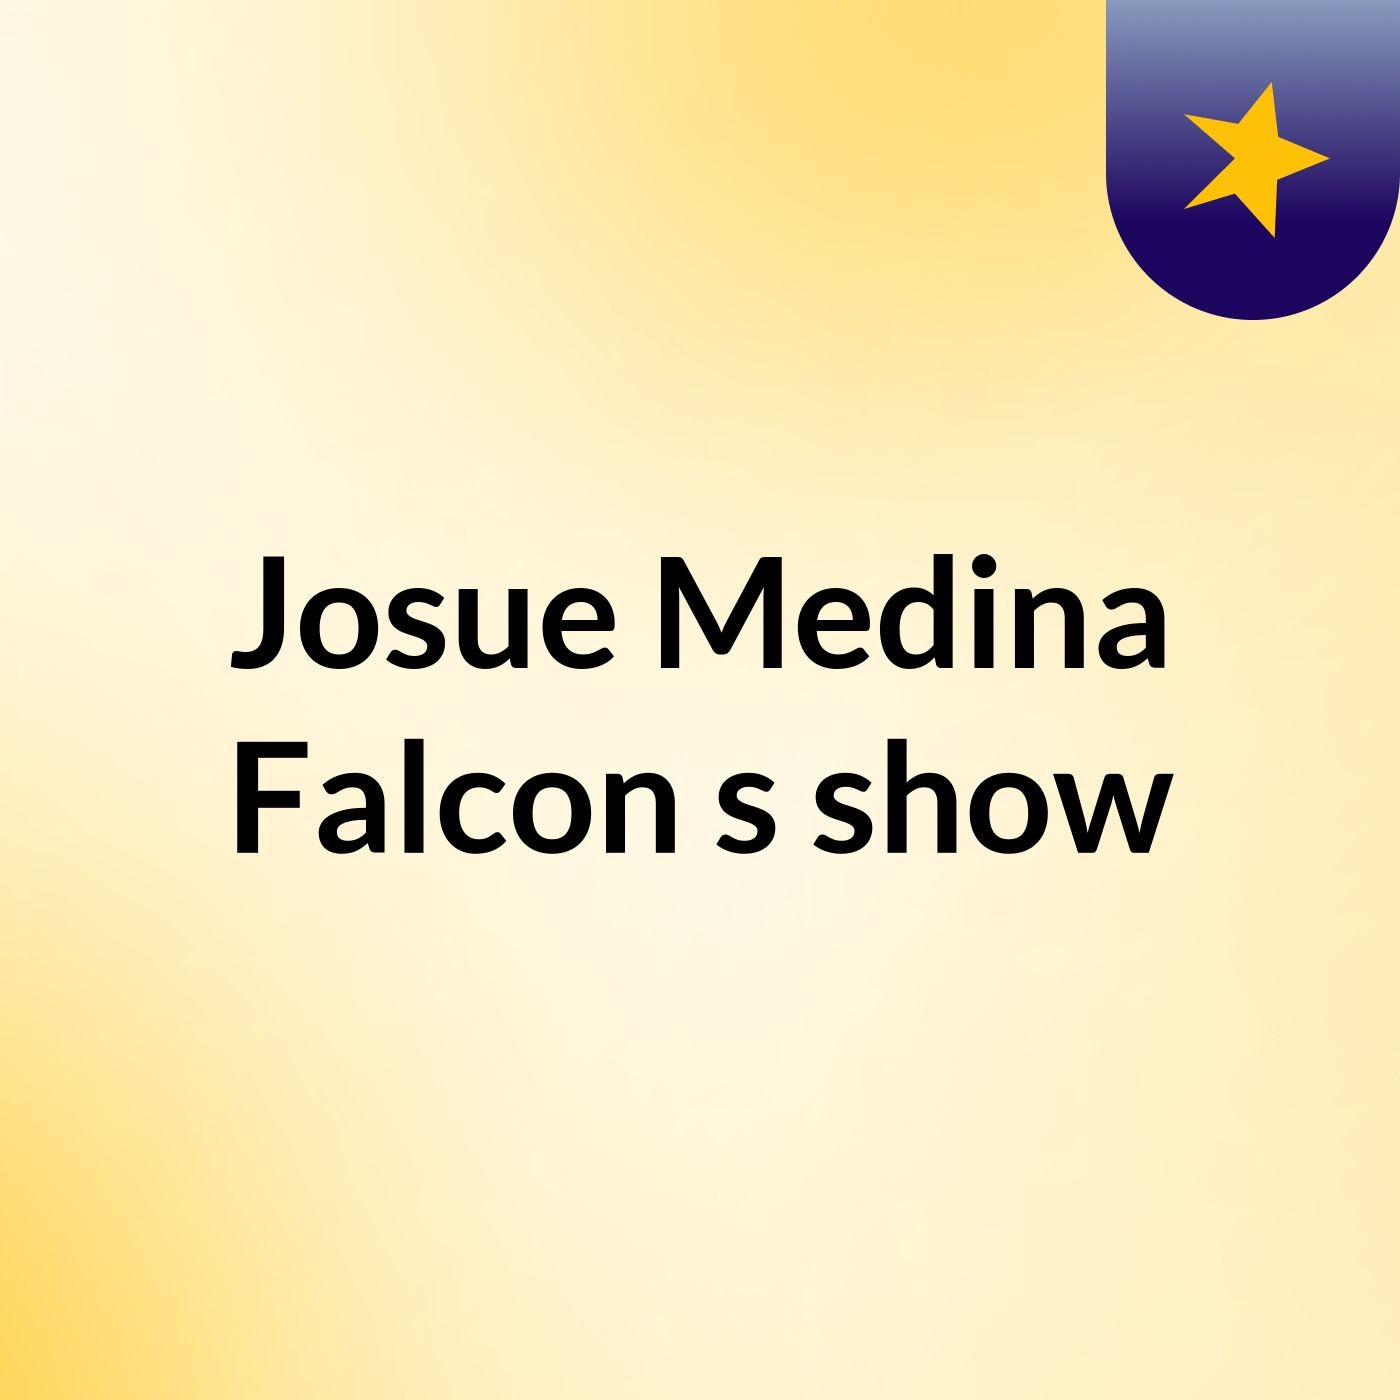 Josue Medina Falcon's show